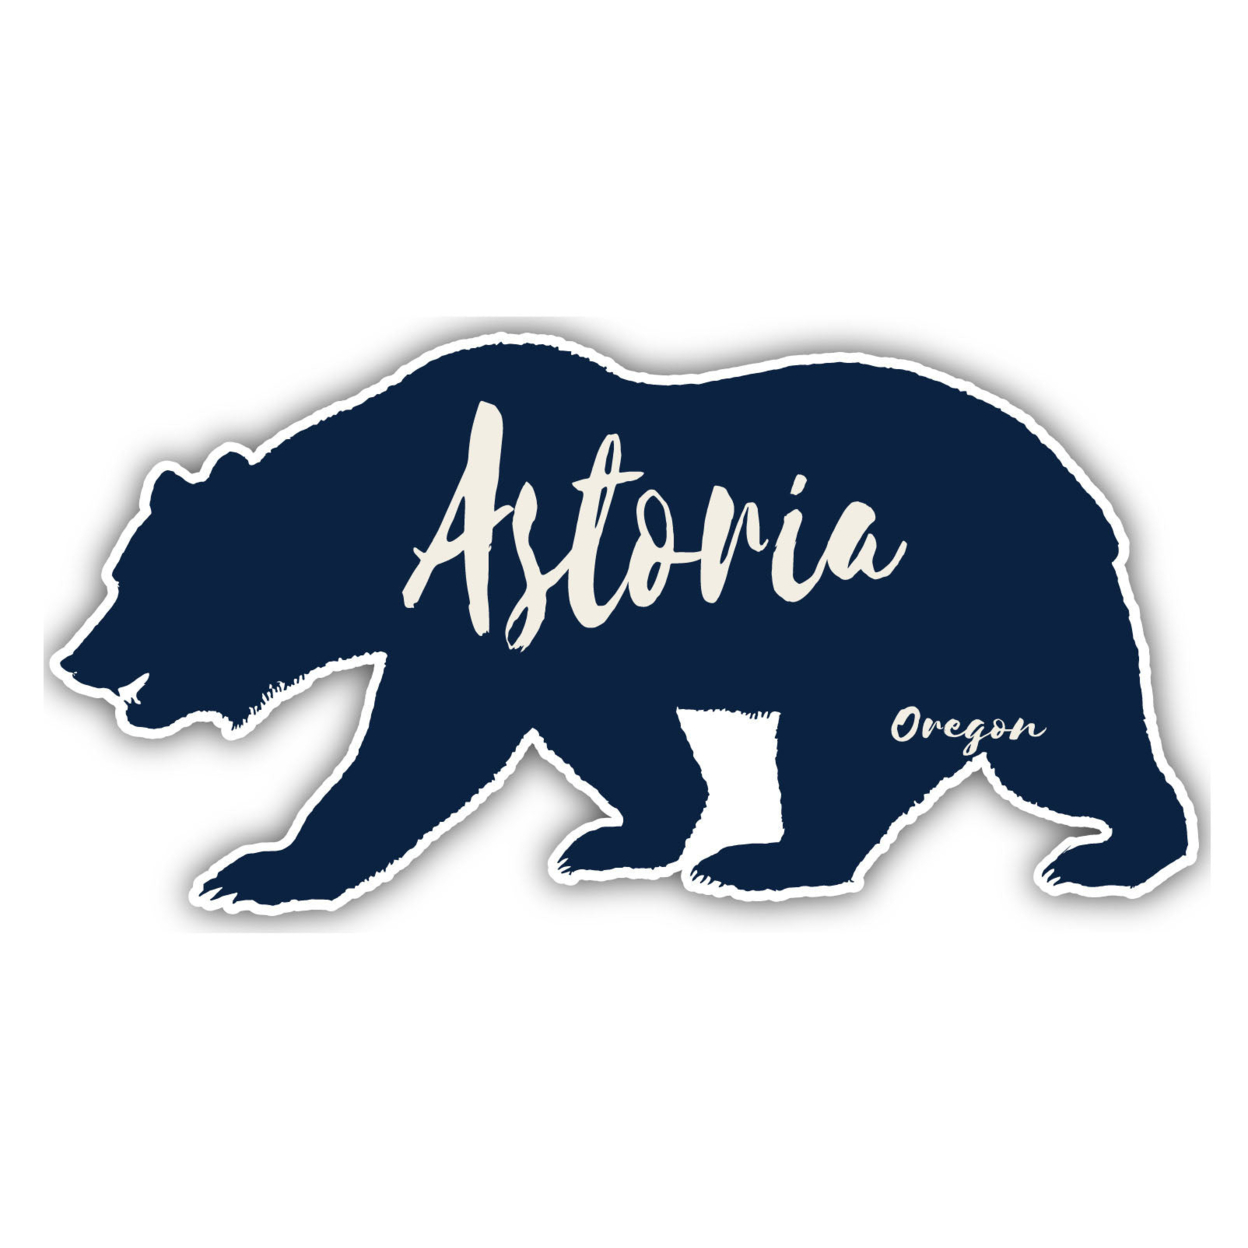 Astoria Oregon Souvenir Decorative Stickers (Choose Theme And Size) - 4-Pack, 6-Inch, Camp Life